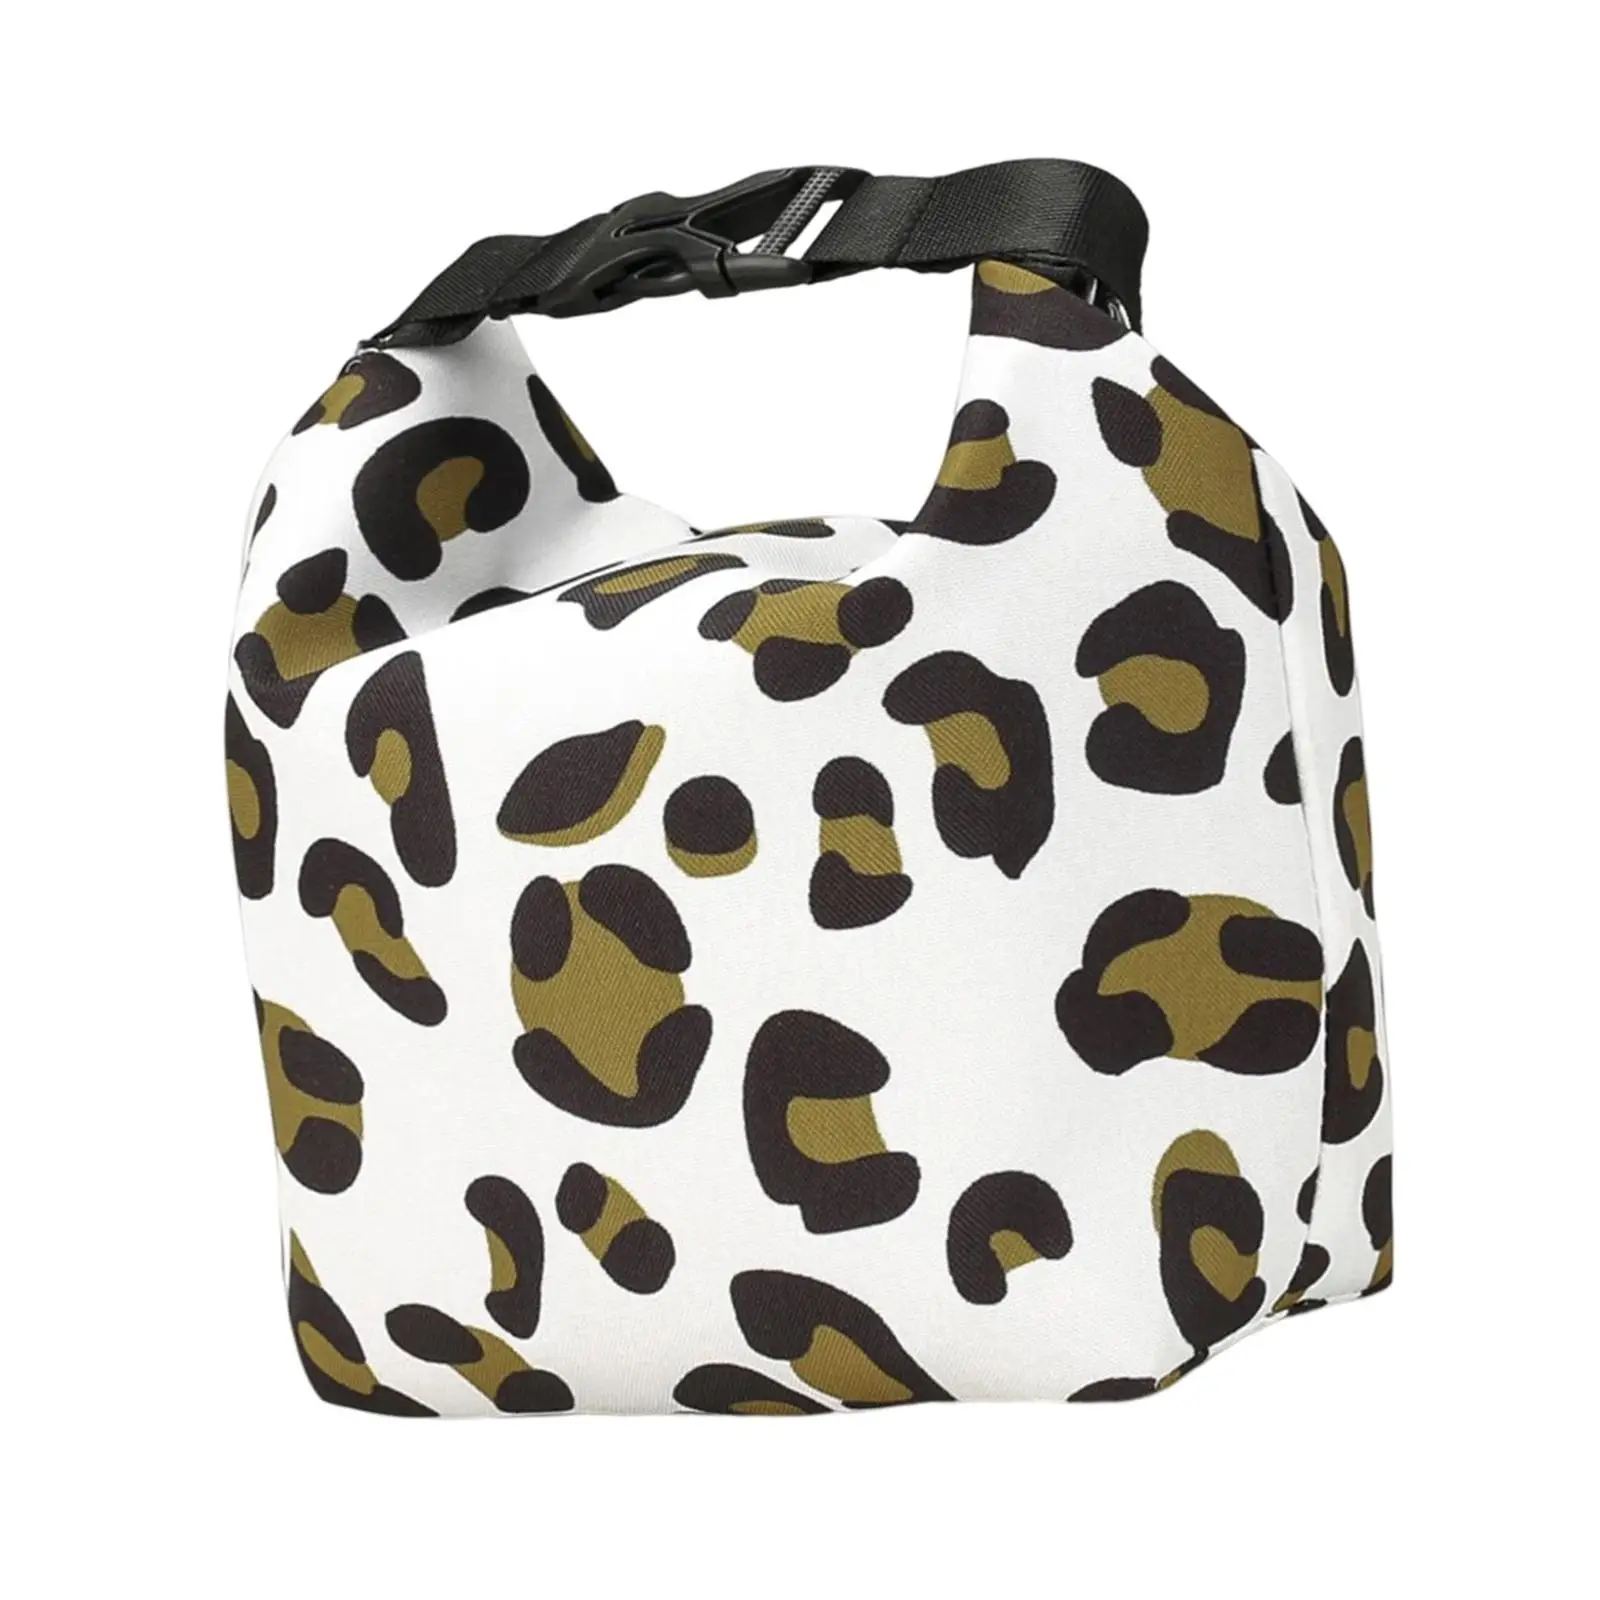 handbag Handbag storage Pouch Baby Diaper Bag for Walking Outdoor Stroller